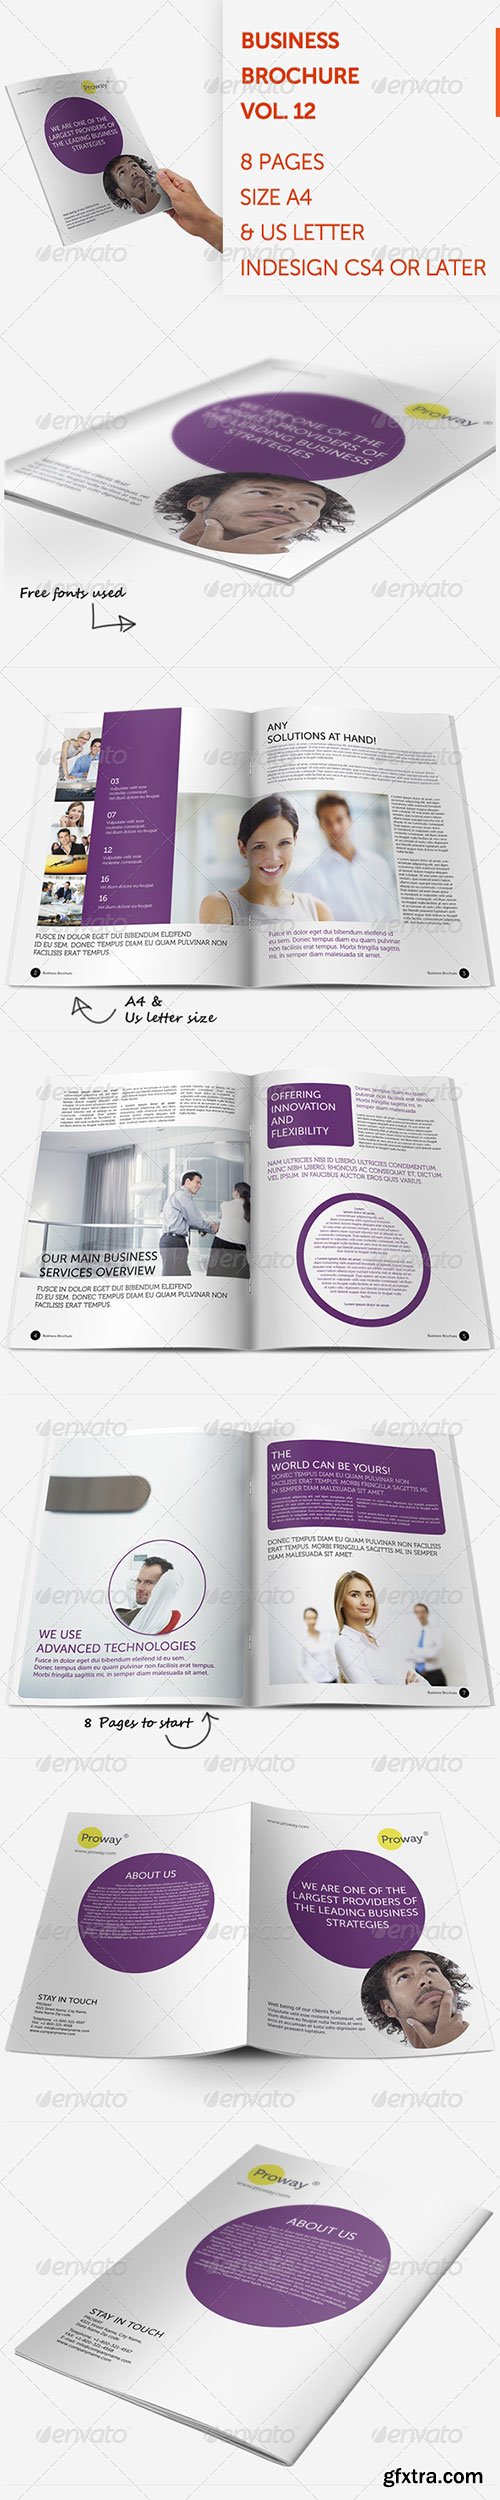 GraphicRiver - Business Brochure Vol. 12